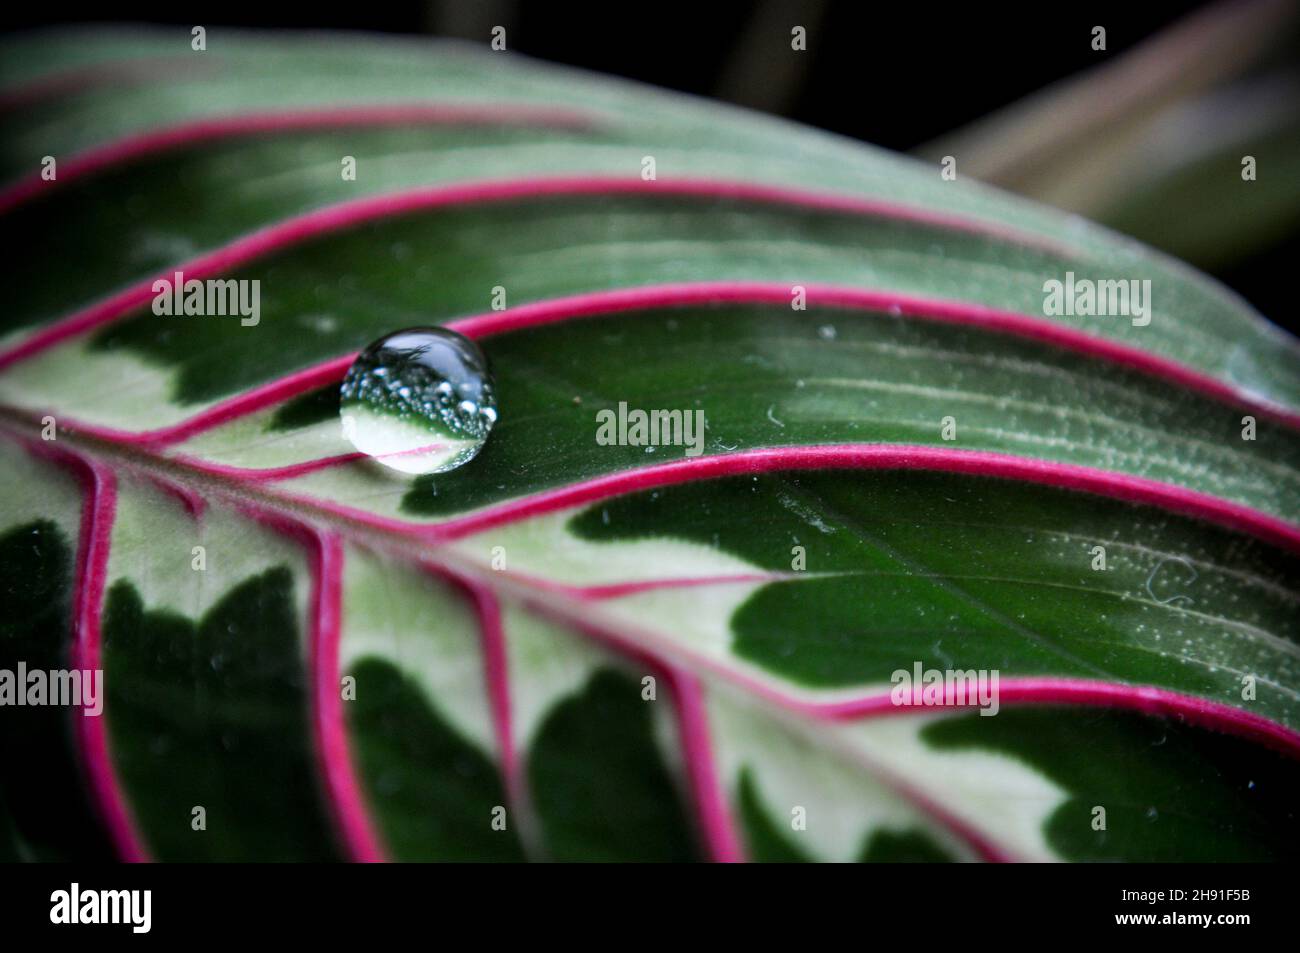 A single water droplet on a prayer plant (Red Maranta Calathea) Stock Photo